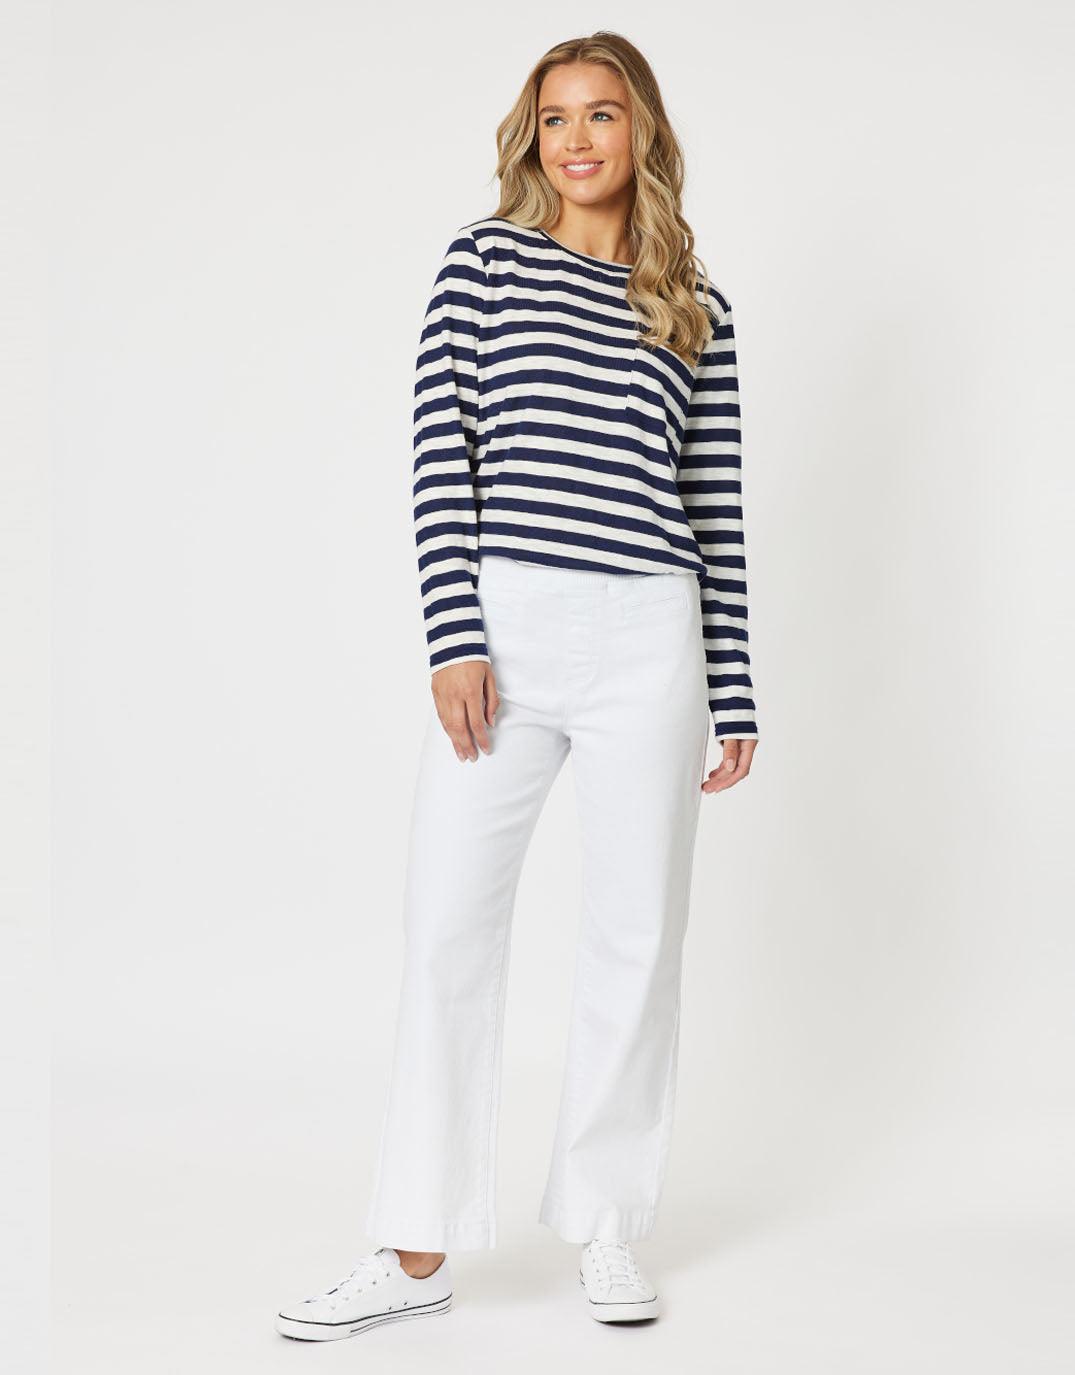 Threadz - Stripe Long Sleeve T-Shirt - Navy/White - paulaglazebrook Tees & Tanks